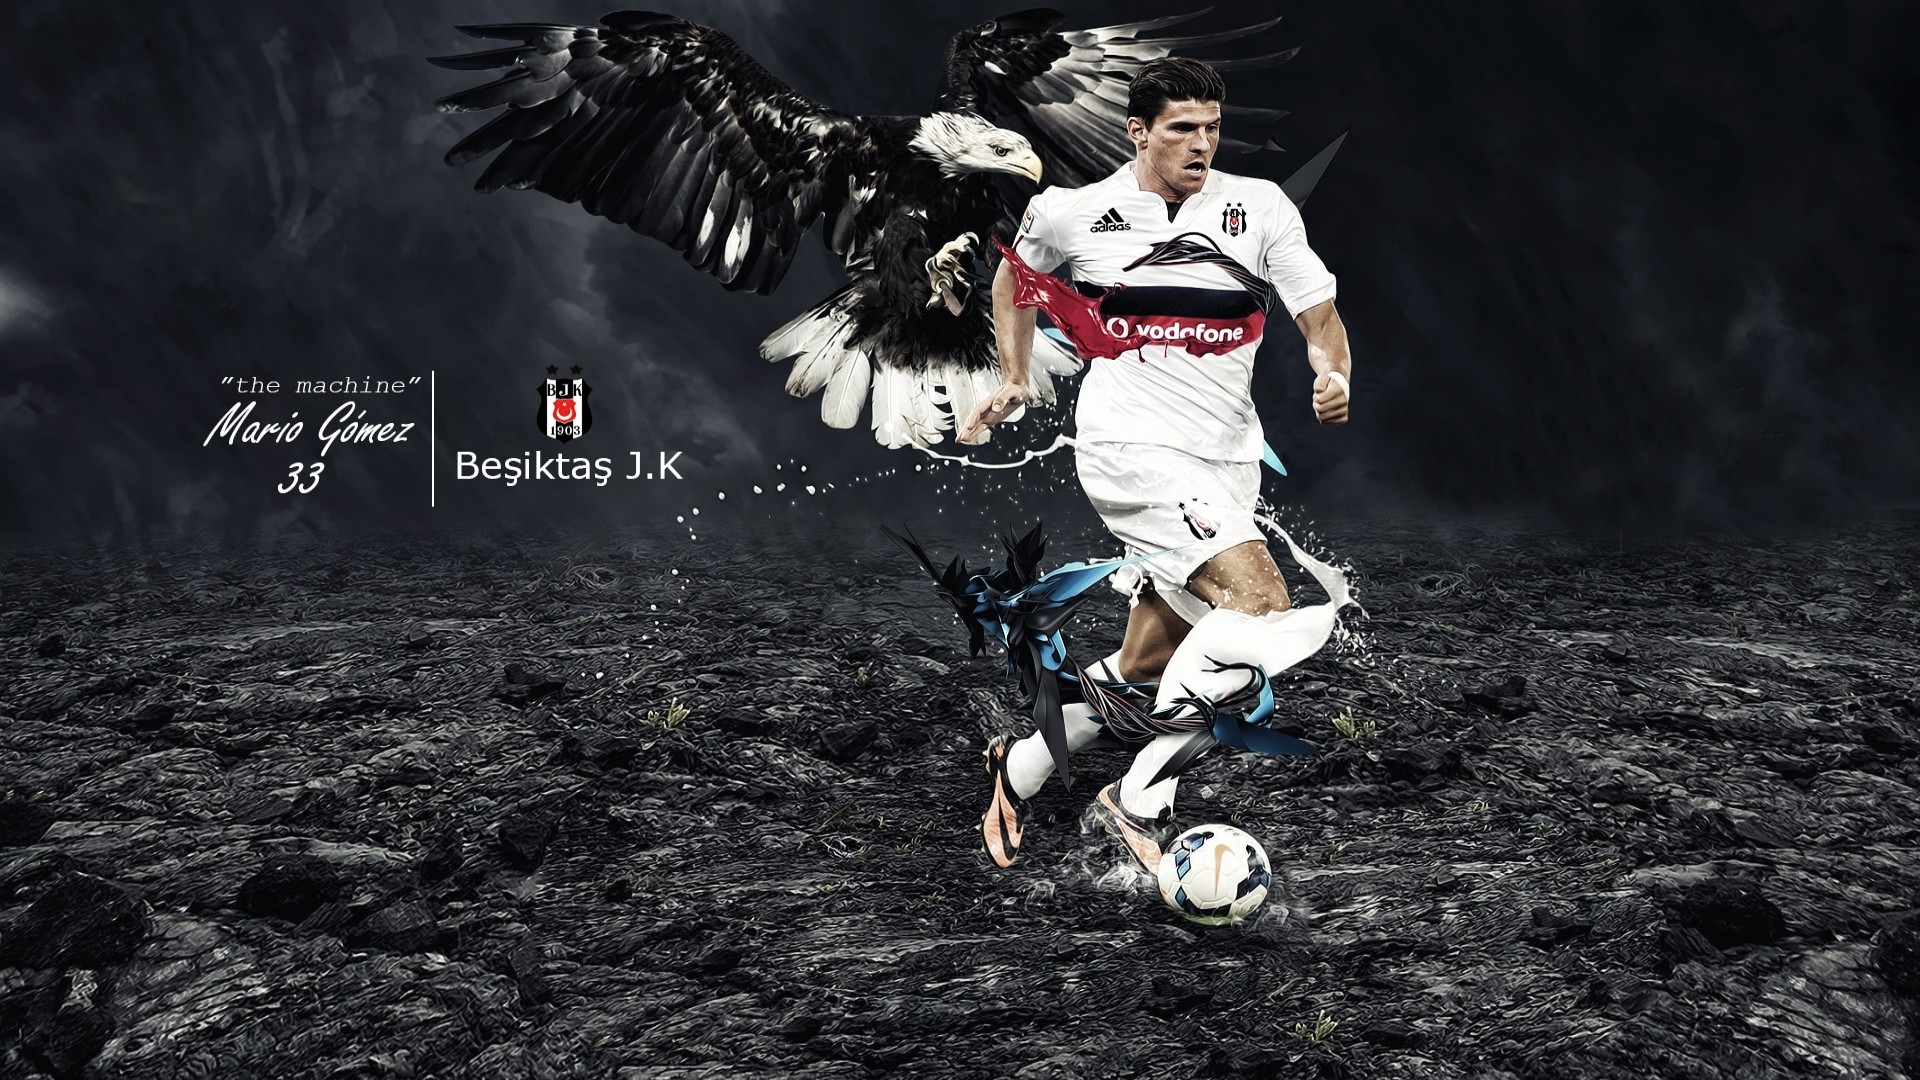 Mario Gomez, Footballers, Besiktas J.K., Eagle Wallpaper